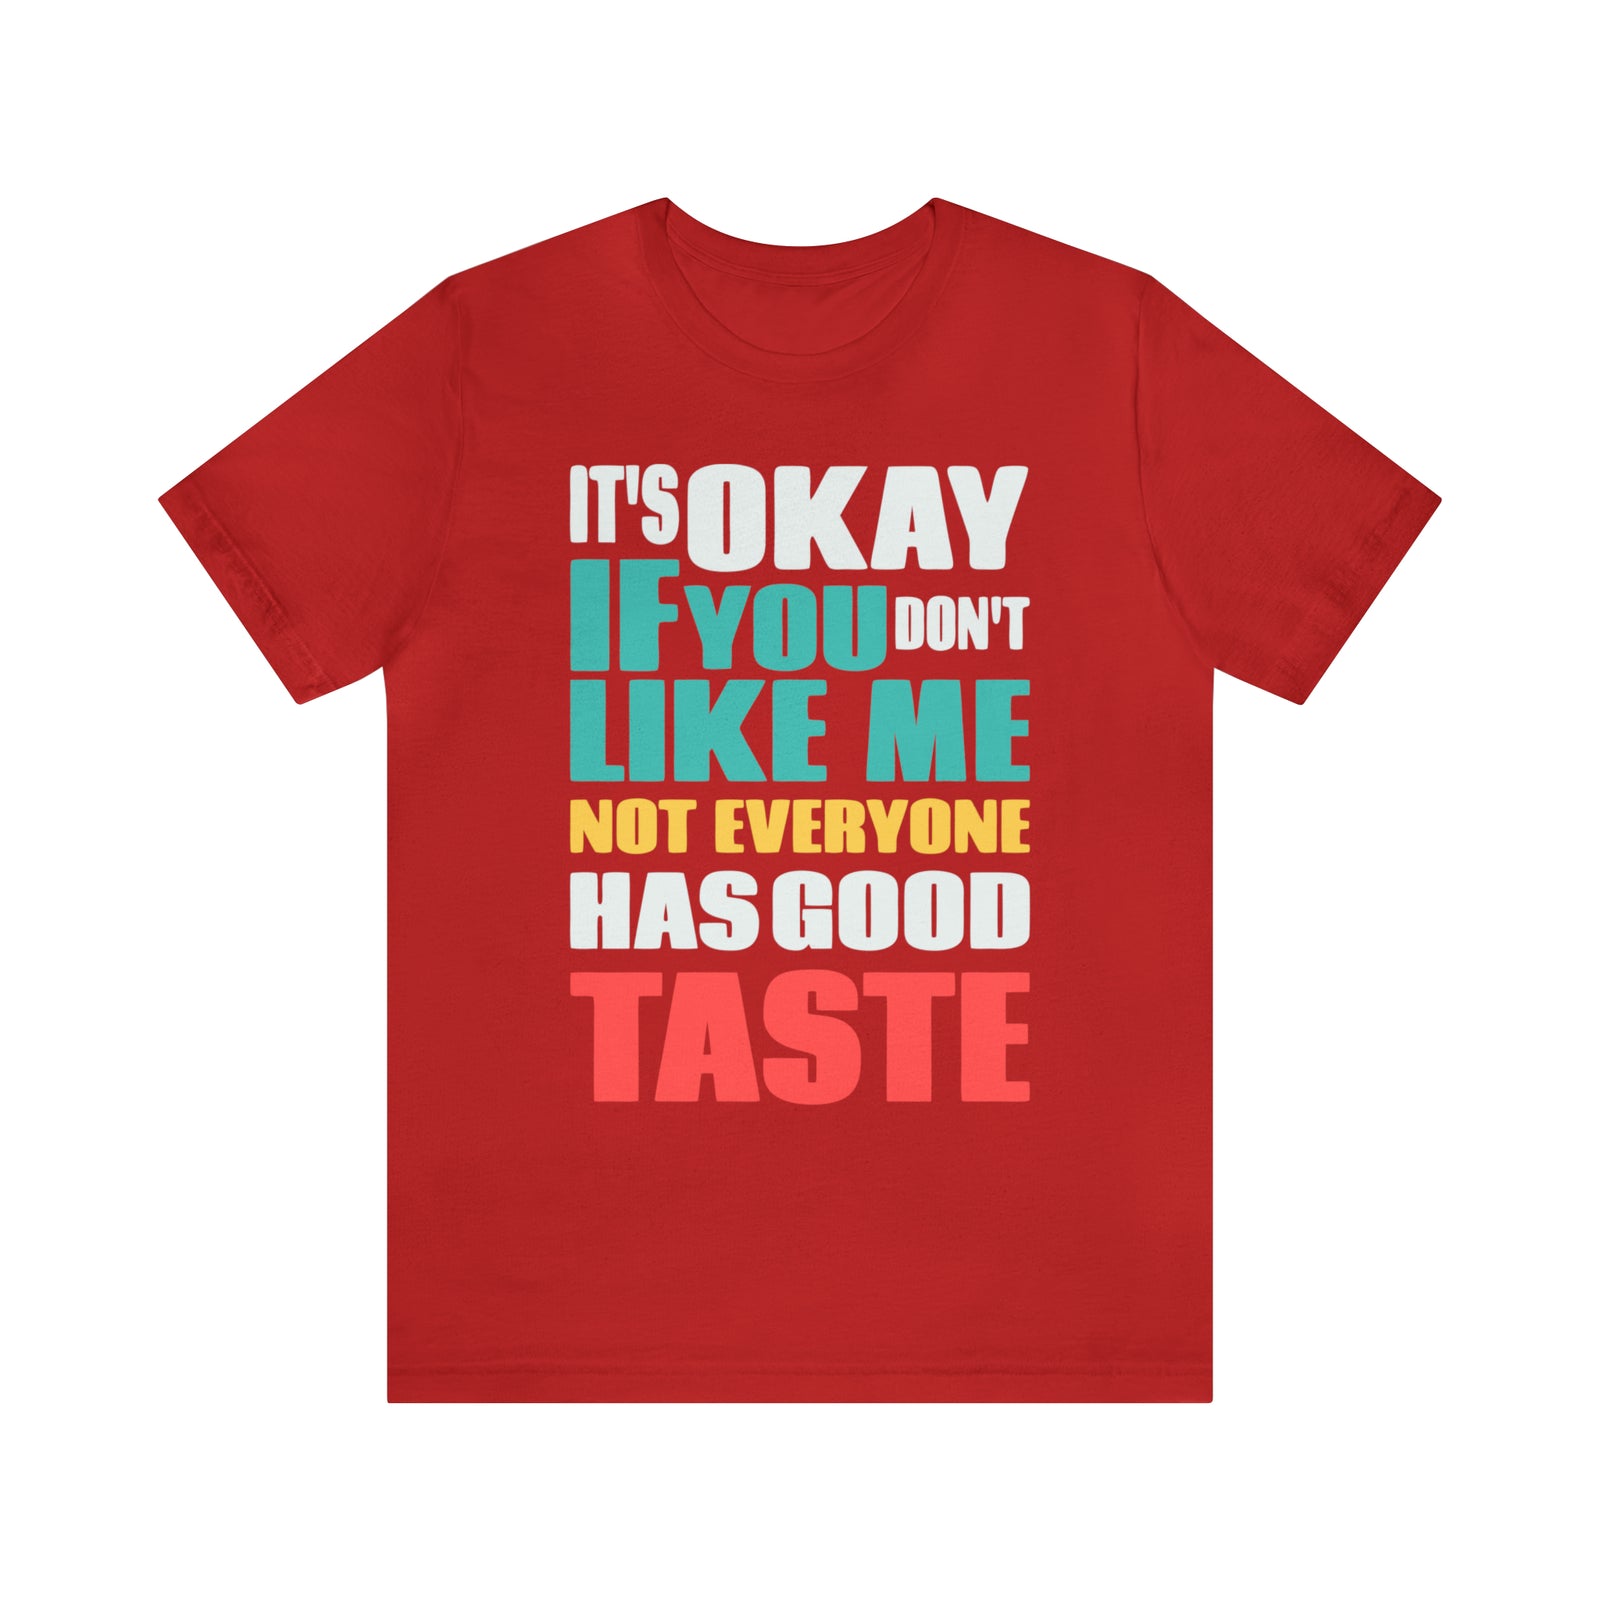 Don't Like me - Men's T-shirt - Sarcasm Swag